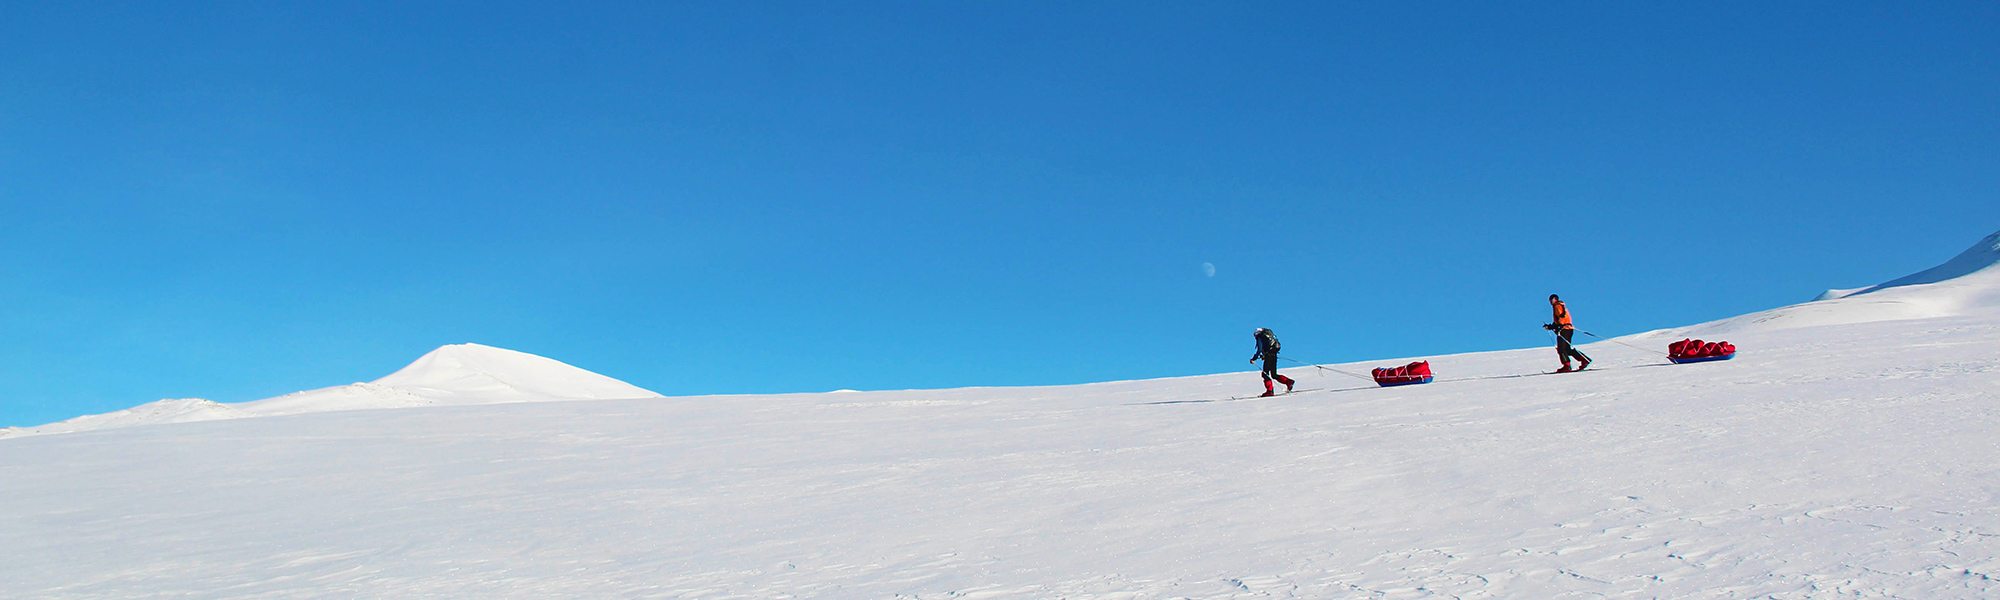 Ski de fond et ski nordique © Victor Labarre